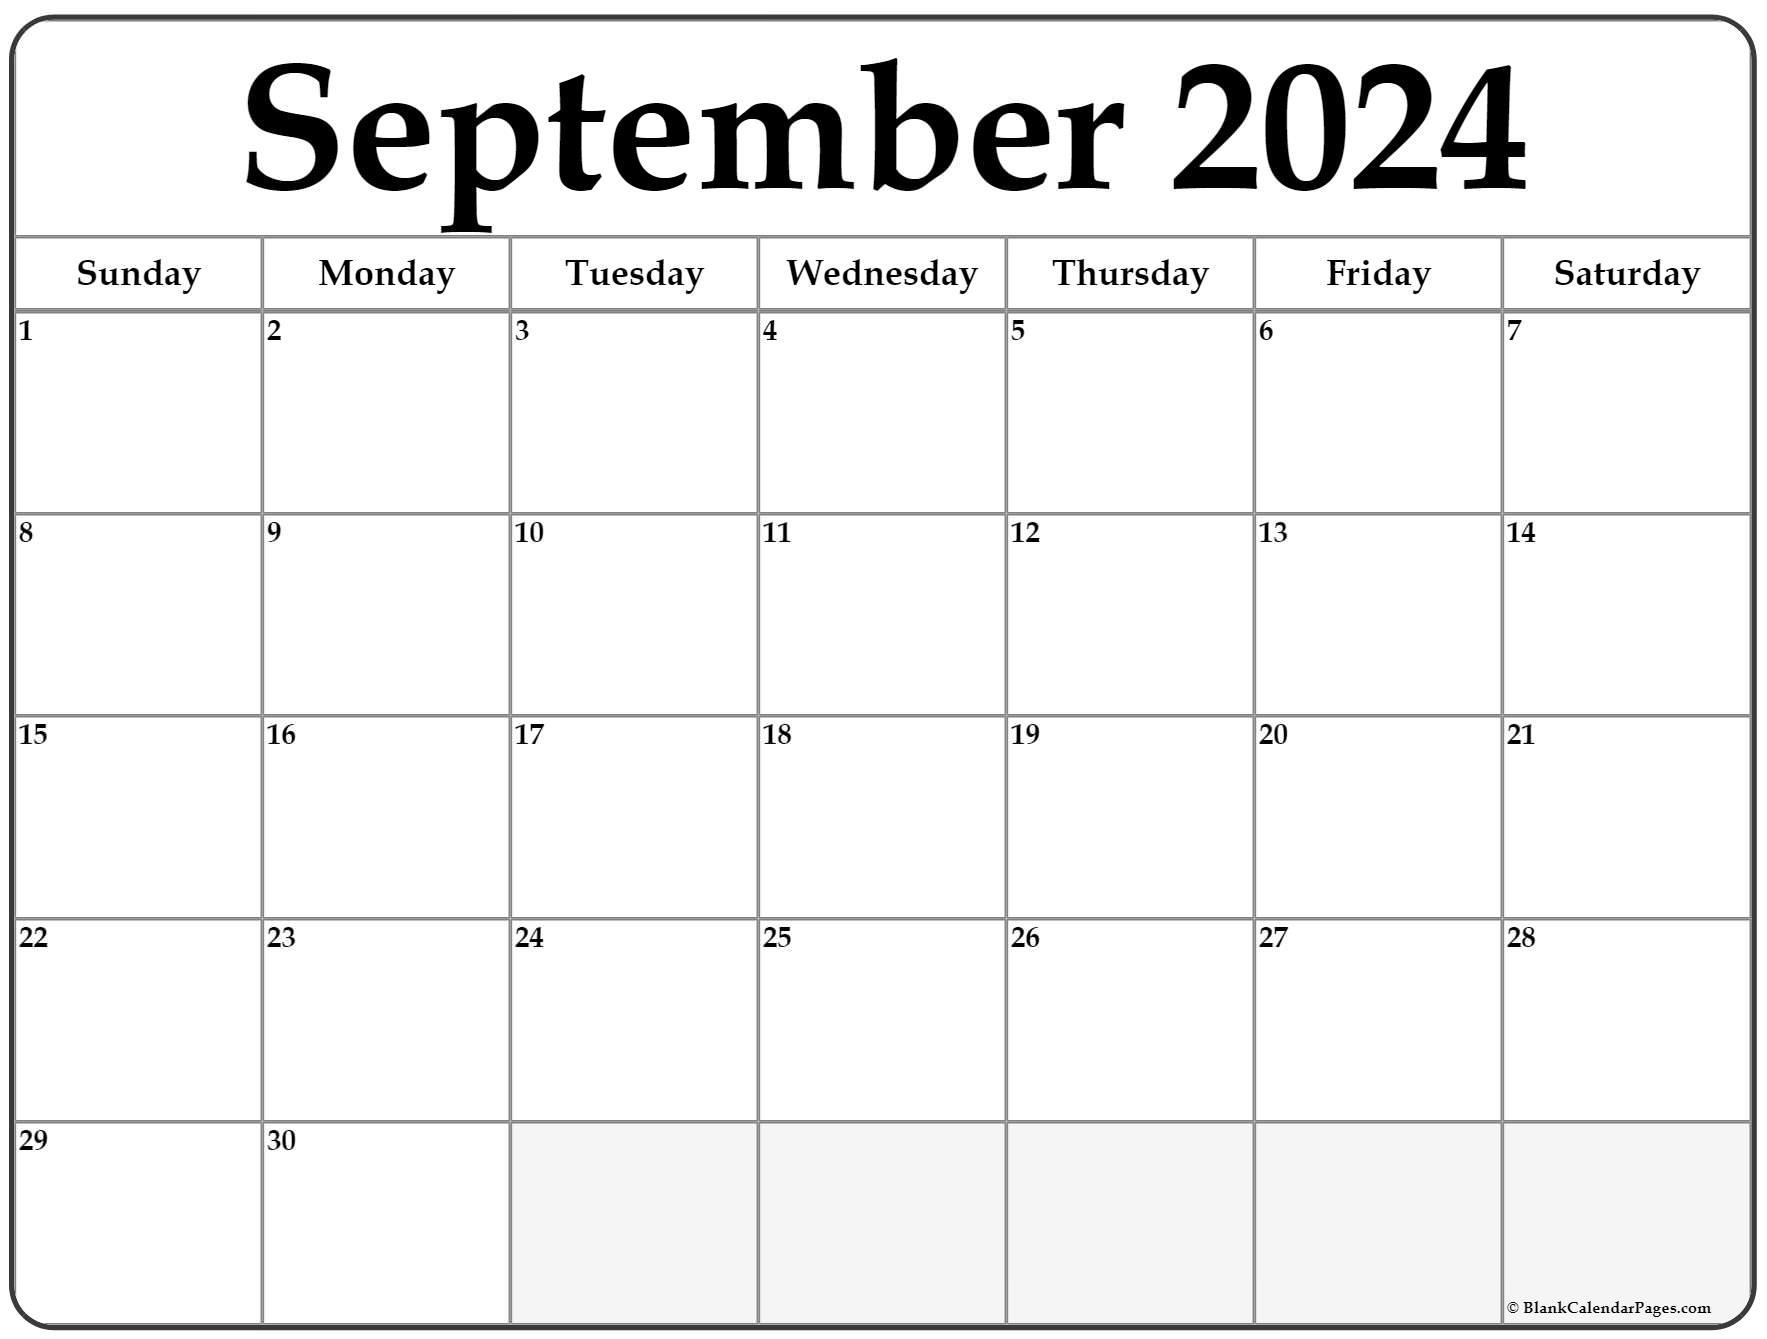 September Calendar 2022 Printable September 2022 Calendar | Free Printable Calendar Templates